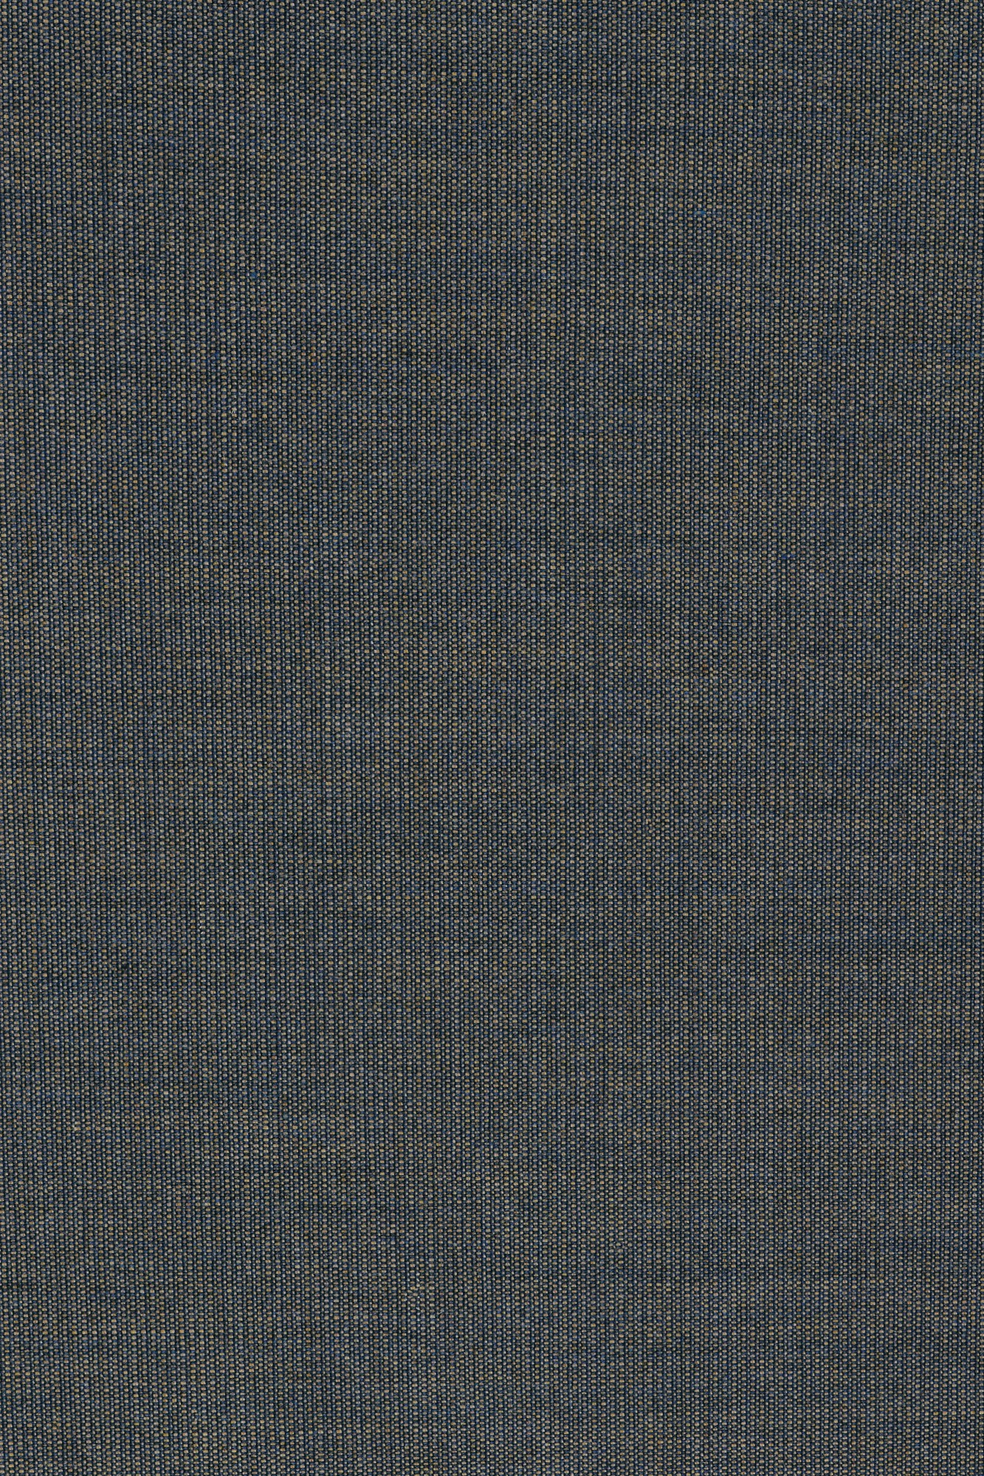 Fabric sample Canvas 2 854 grey